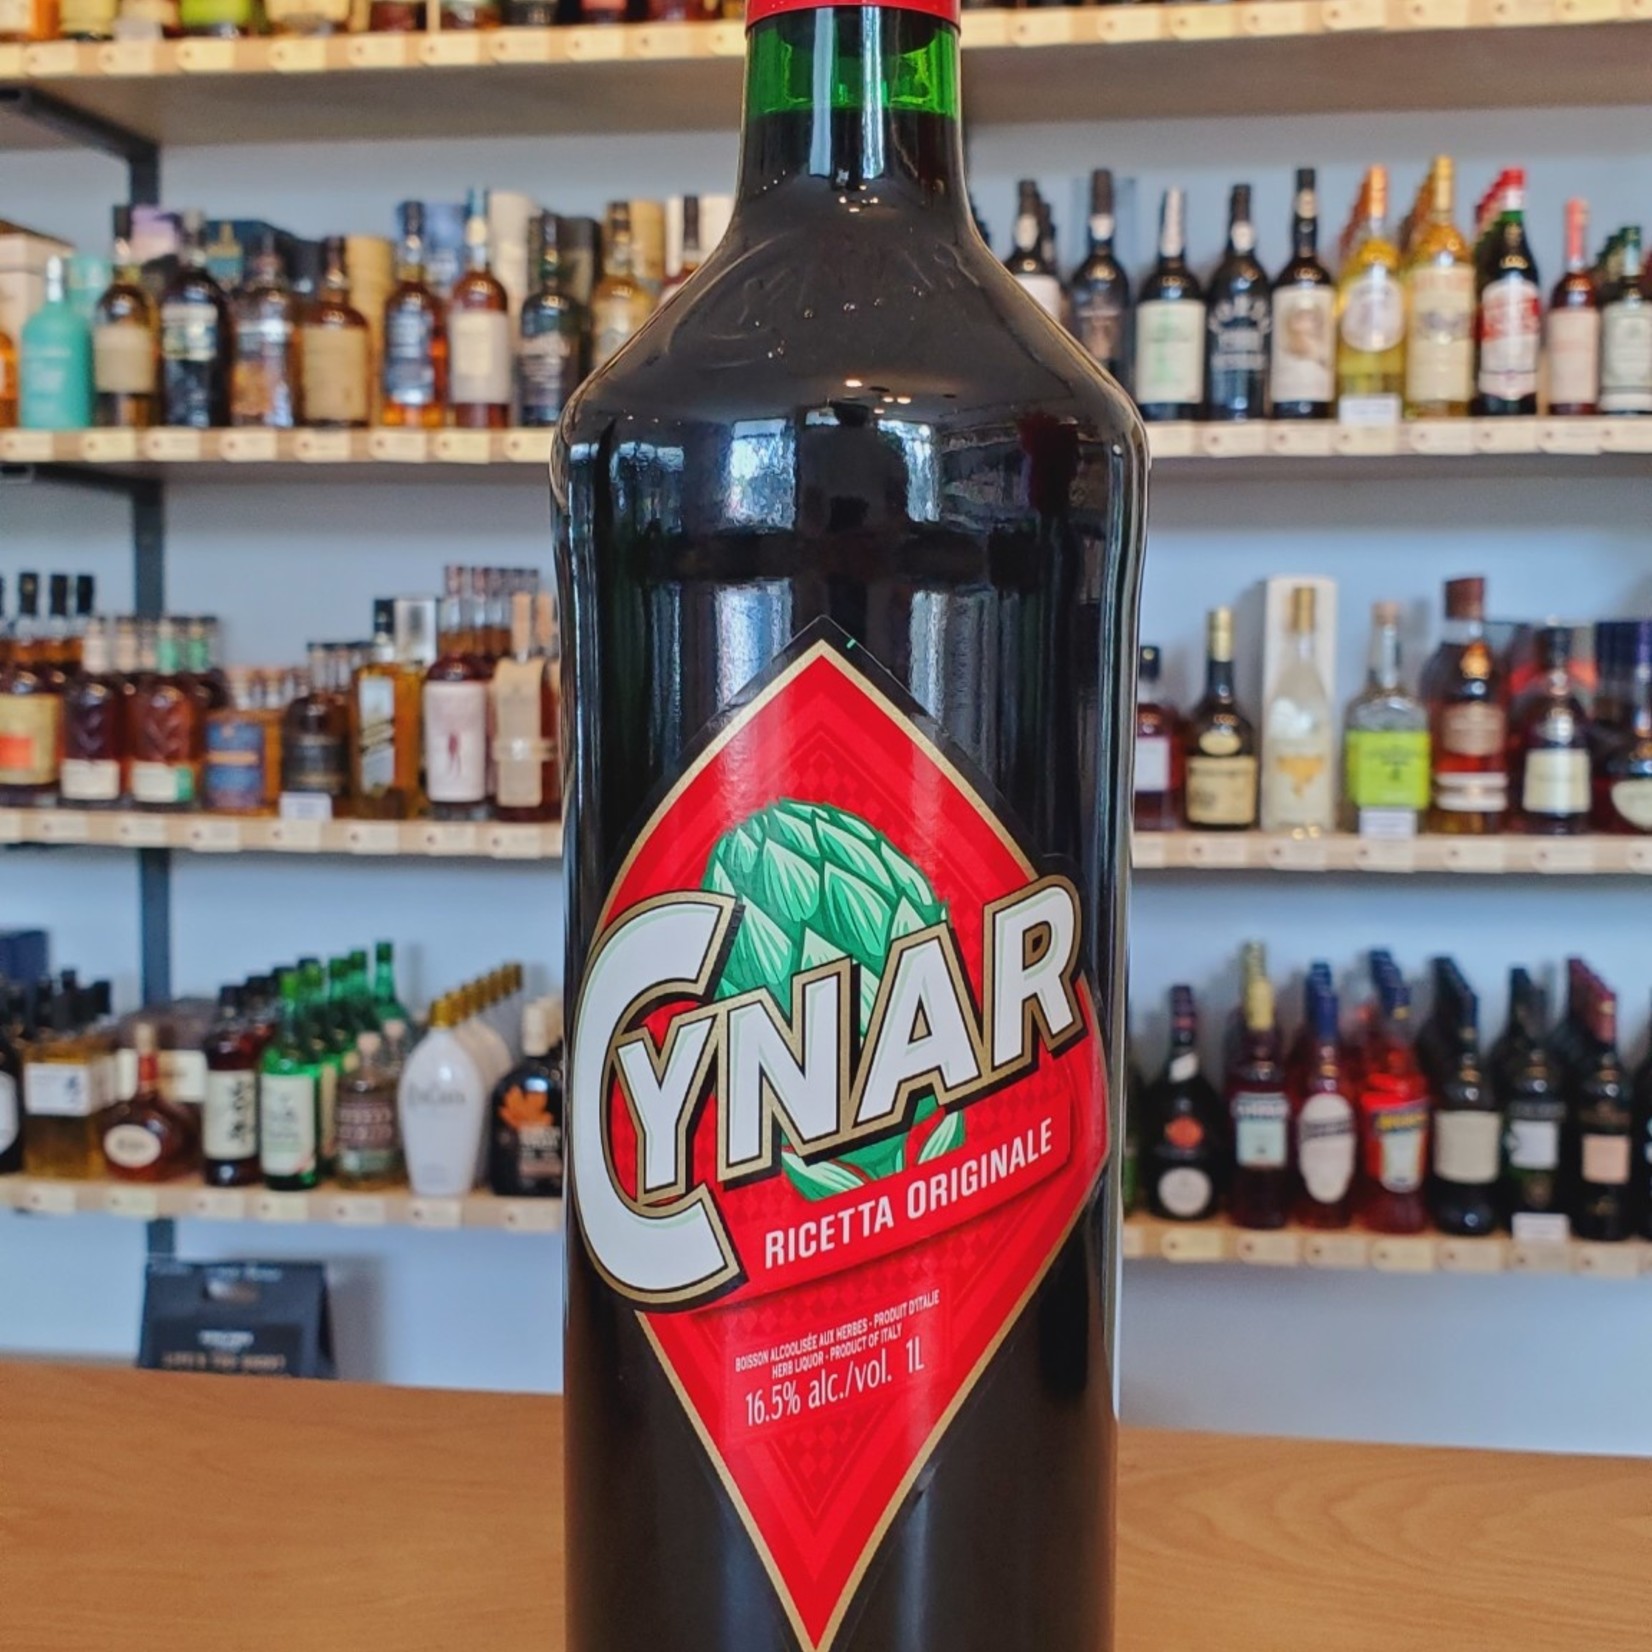 Cynar Ricetta Originale, 'Cynar' Artichoke Liqueur 1L 16.5%